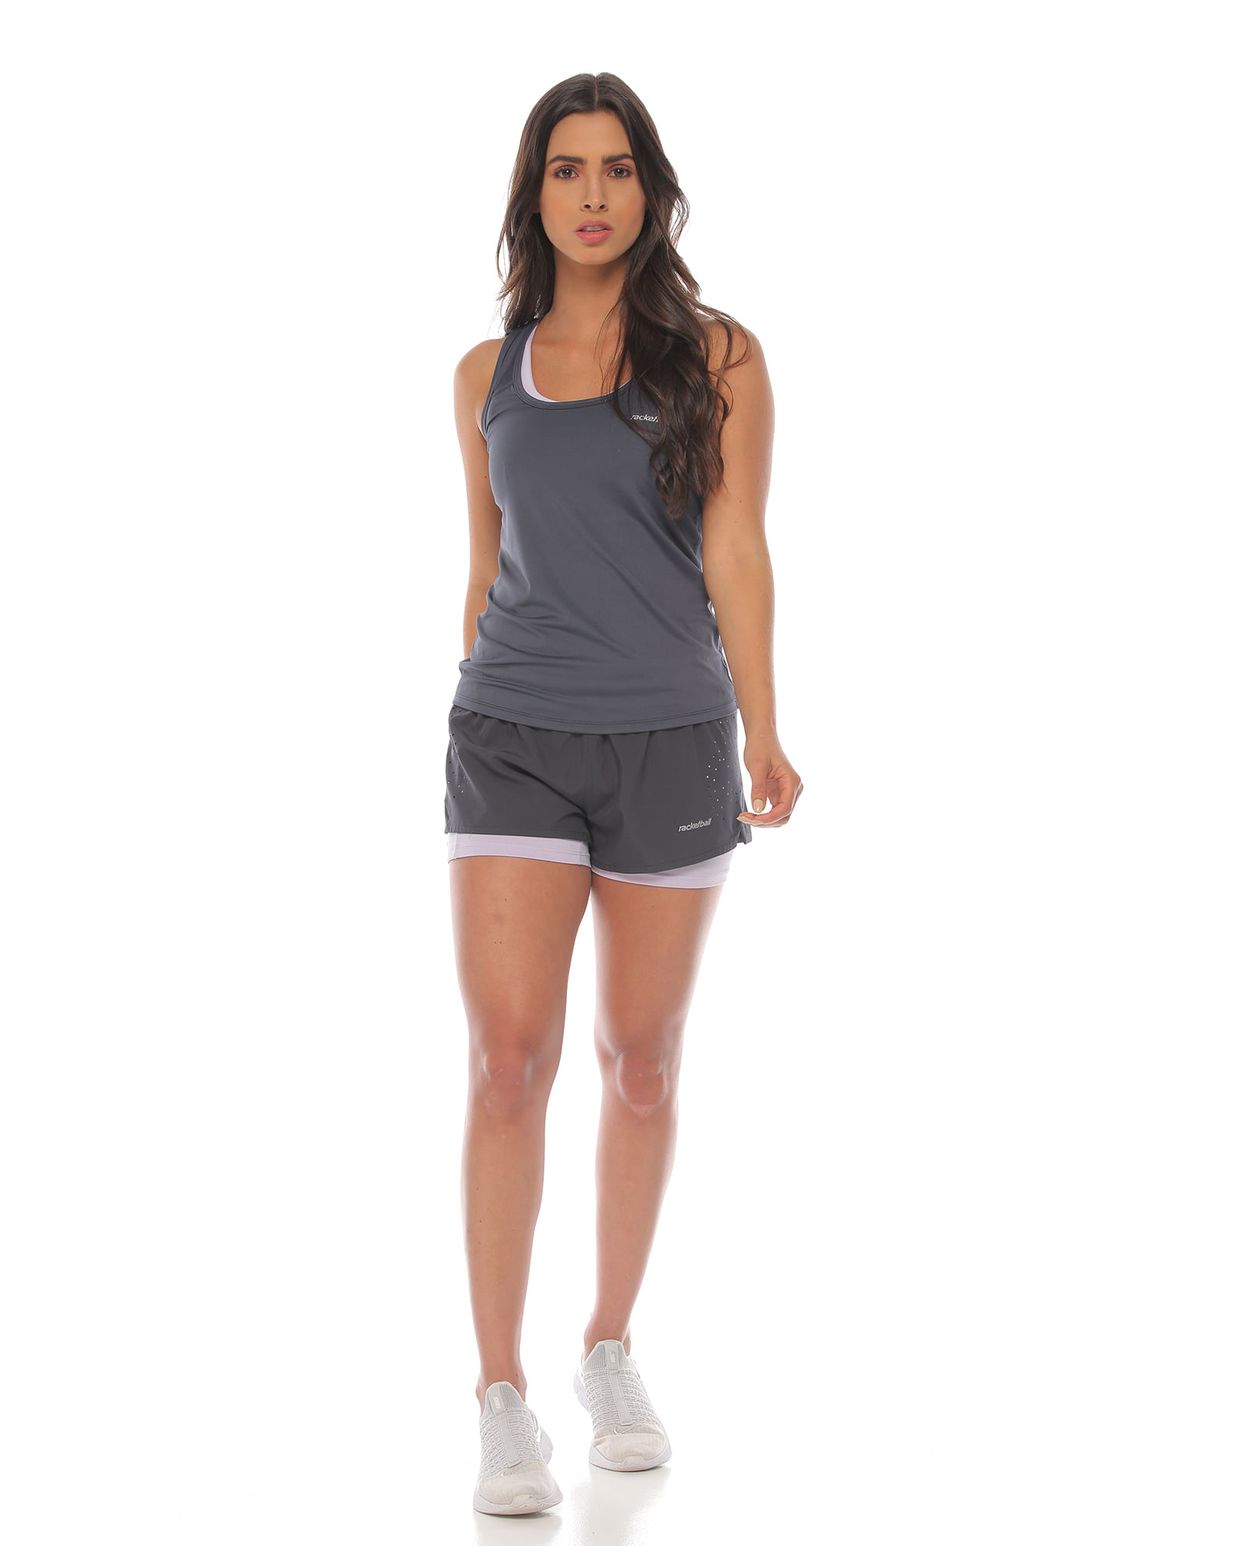 modelo con pantaloneta running deportiva y esqueleto deportivo color gris oscuro para mujer cuerpo completo